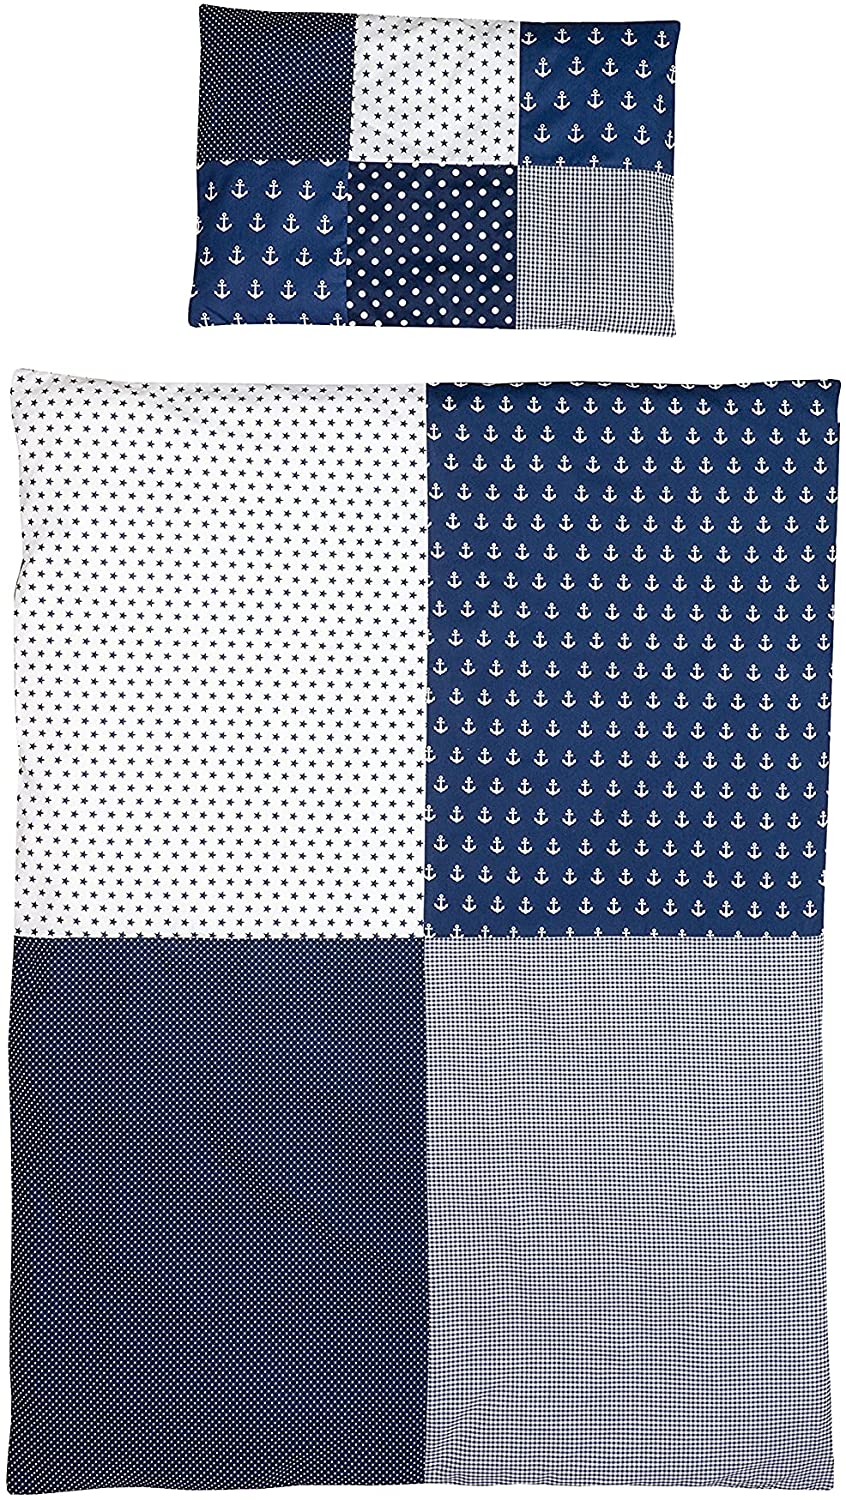 ULLENBOOM ® Children\'s Bed Linen 100 x 135 cm Anchor Blue (Made in EU) - Pillowcase (40 x 60 cm) and Duvet Cover (100 x 135 cm), Children\'s and Baby Bed Linen Made of Cotton, Patchwork Design